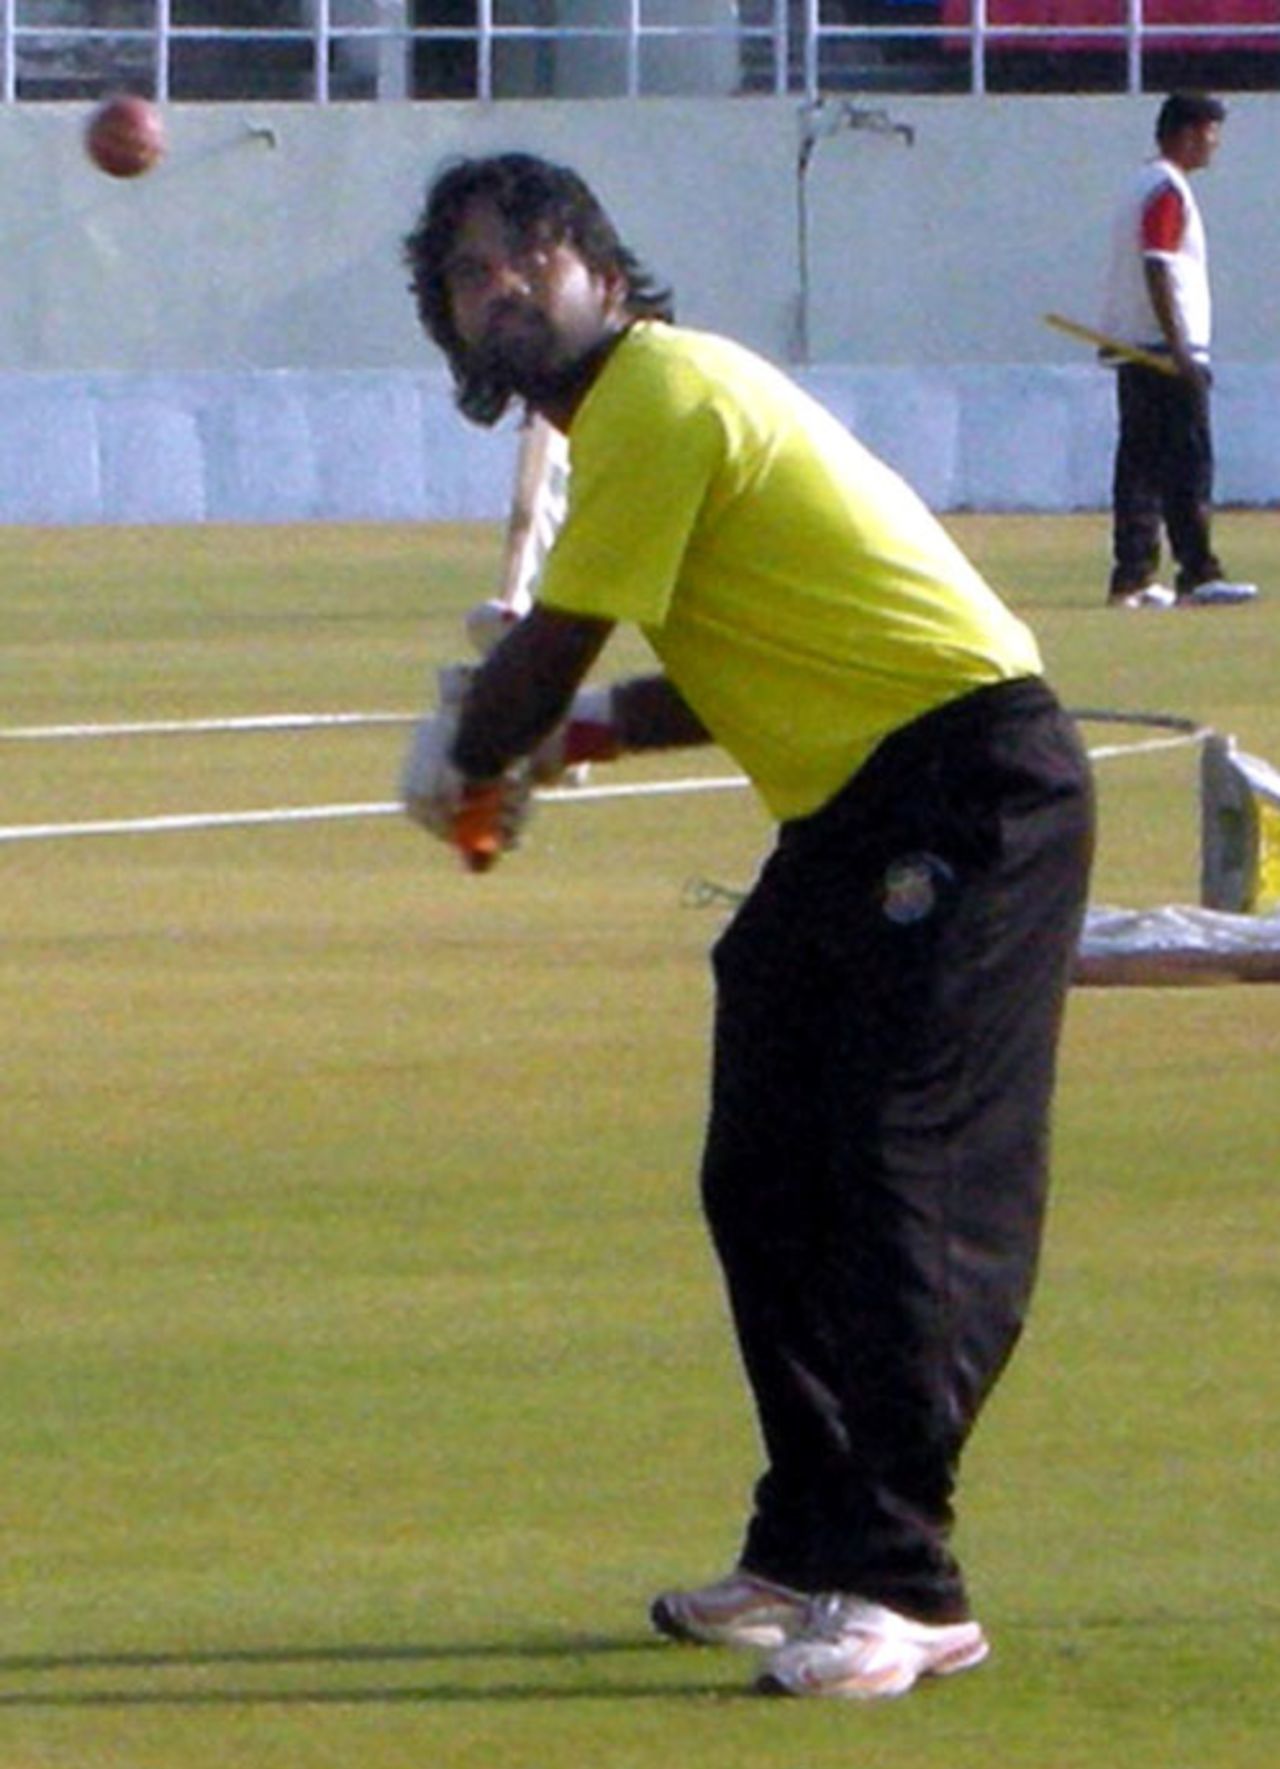 Venugopal Rao, the Maharashtra captain, practises in Dharamsala two days ahead of the Ranji Trophy tie against Himachal Pradesh, November 21, 2007